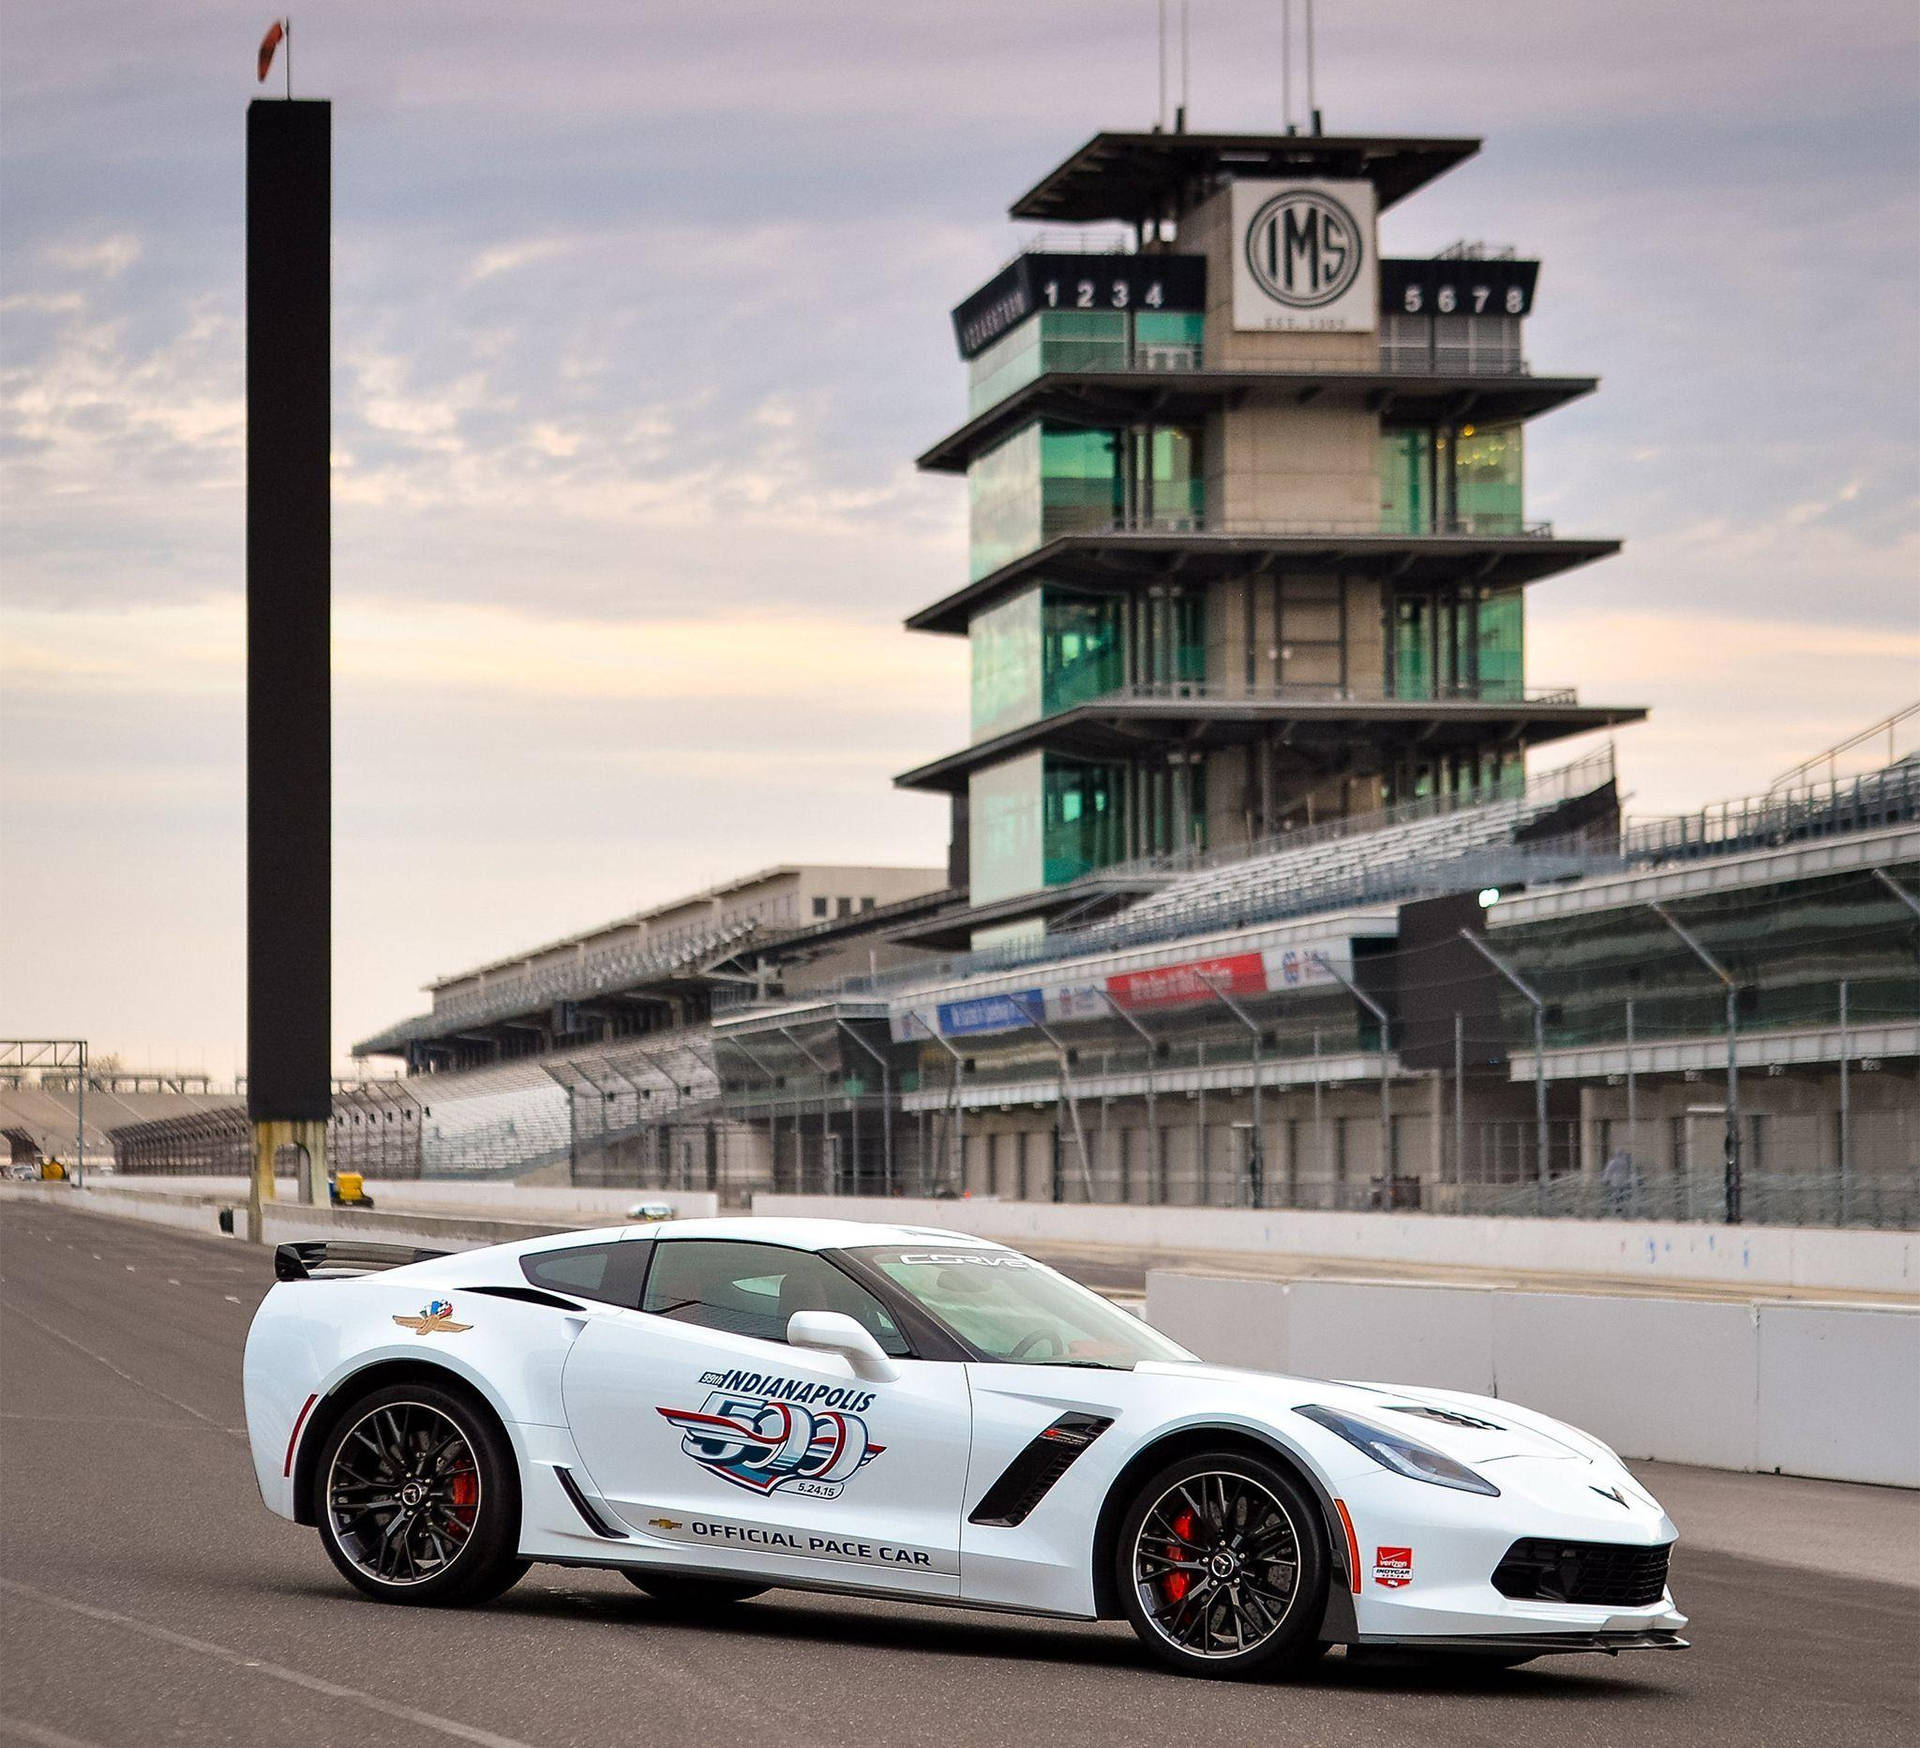 White Sports Car At Indianapolis 500